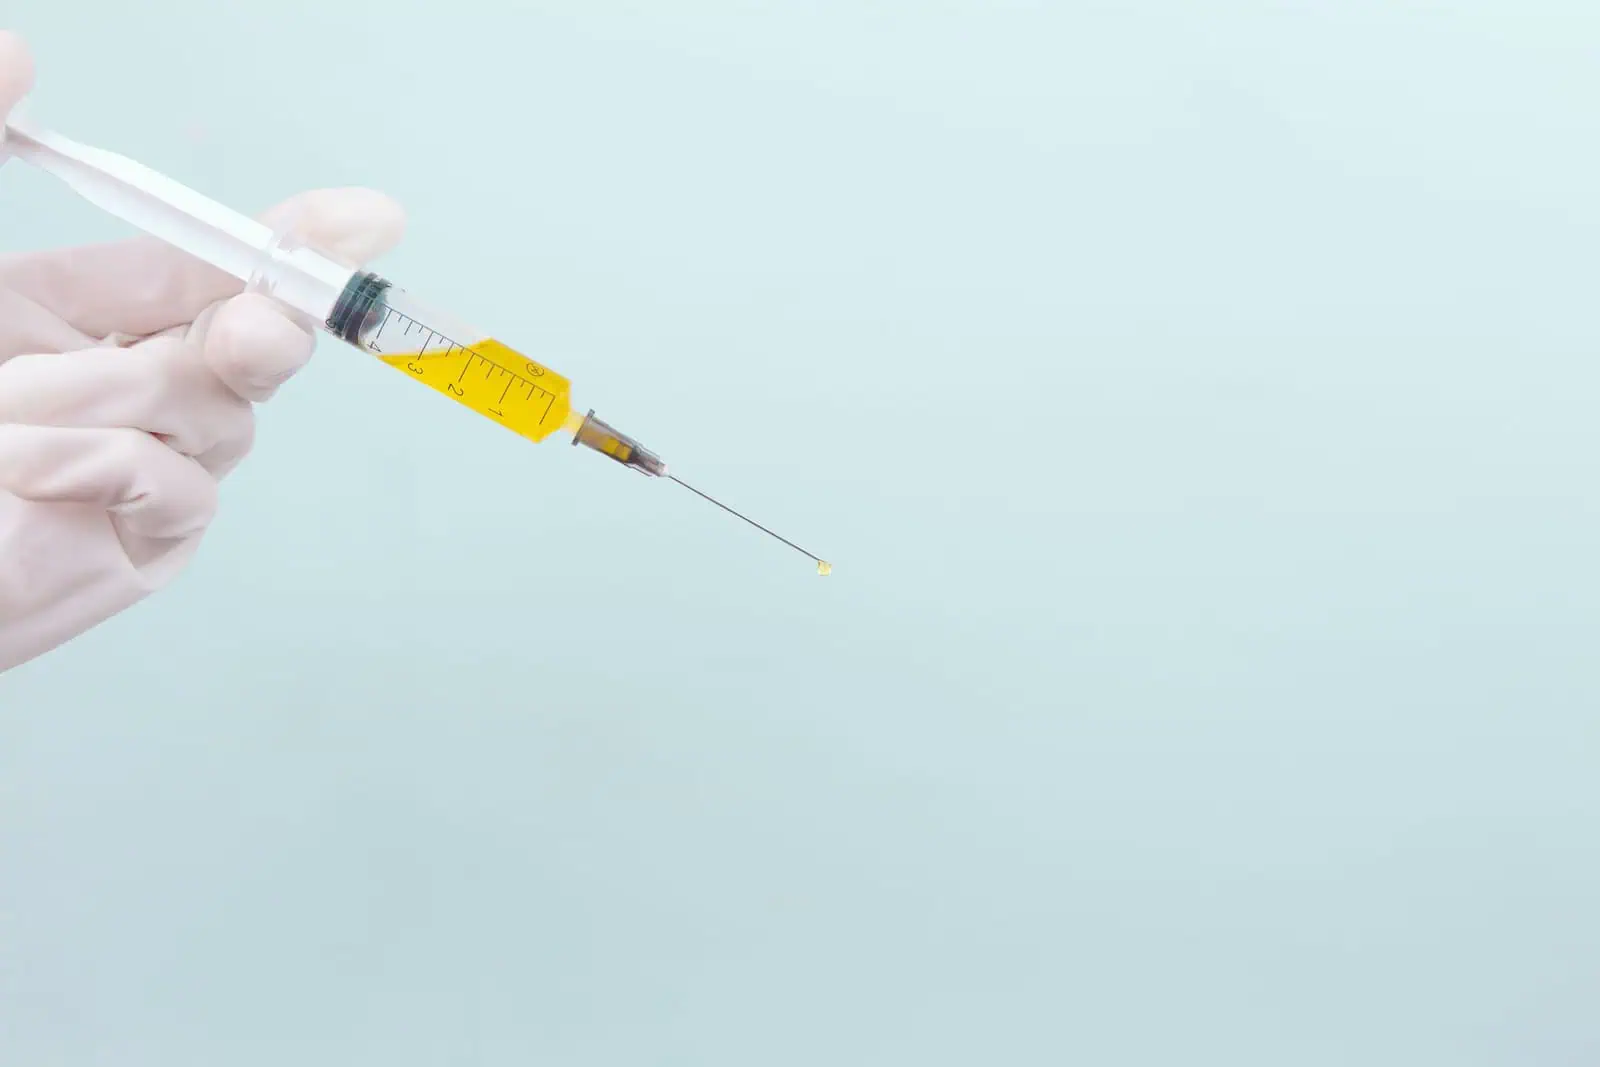 Tdap Vaccine